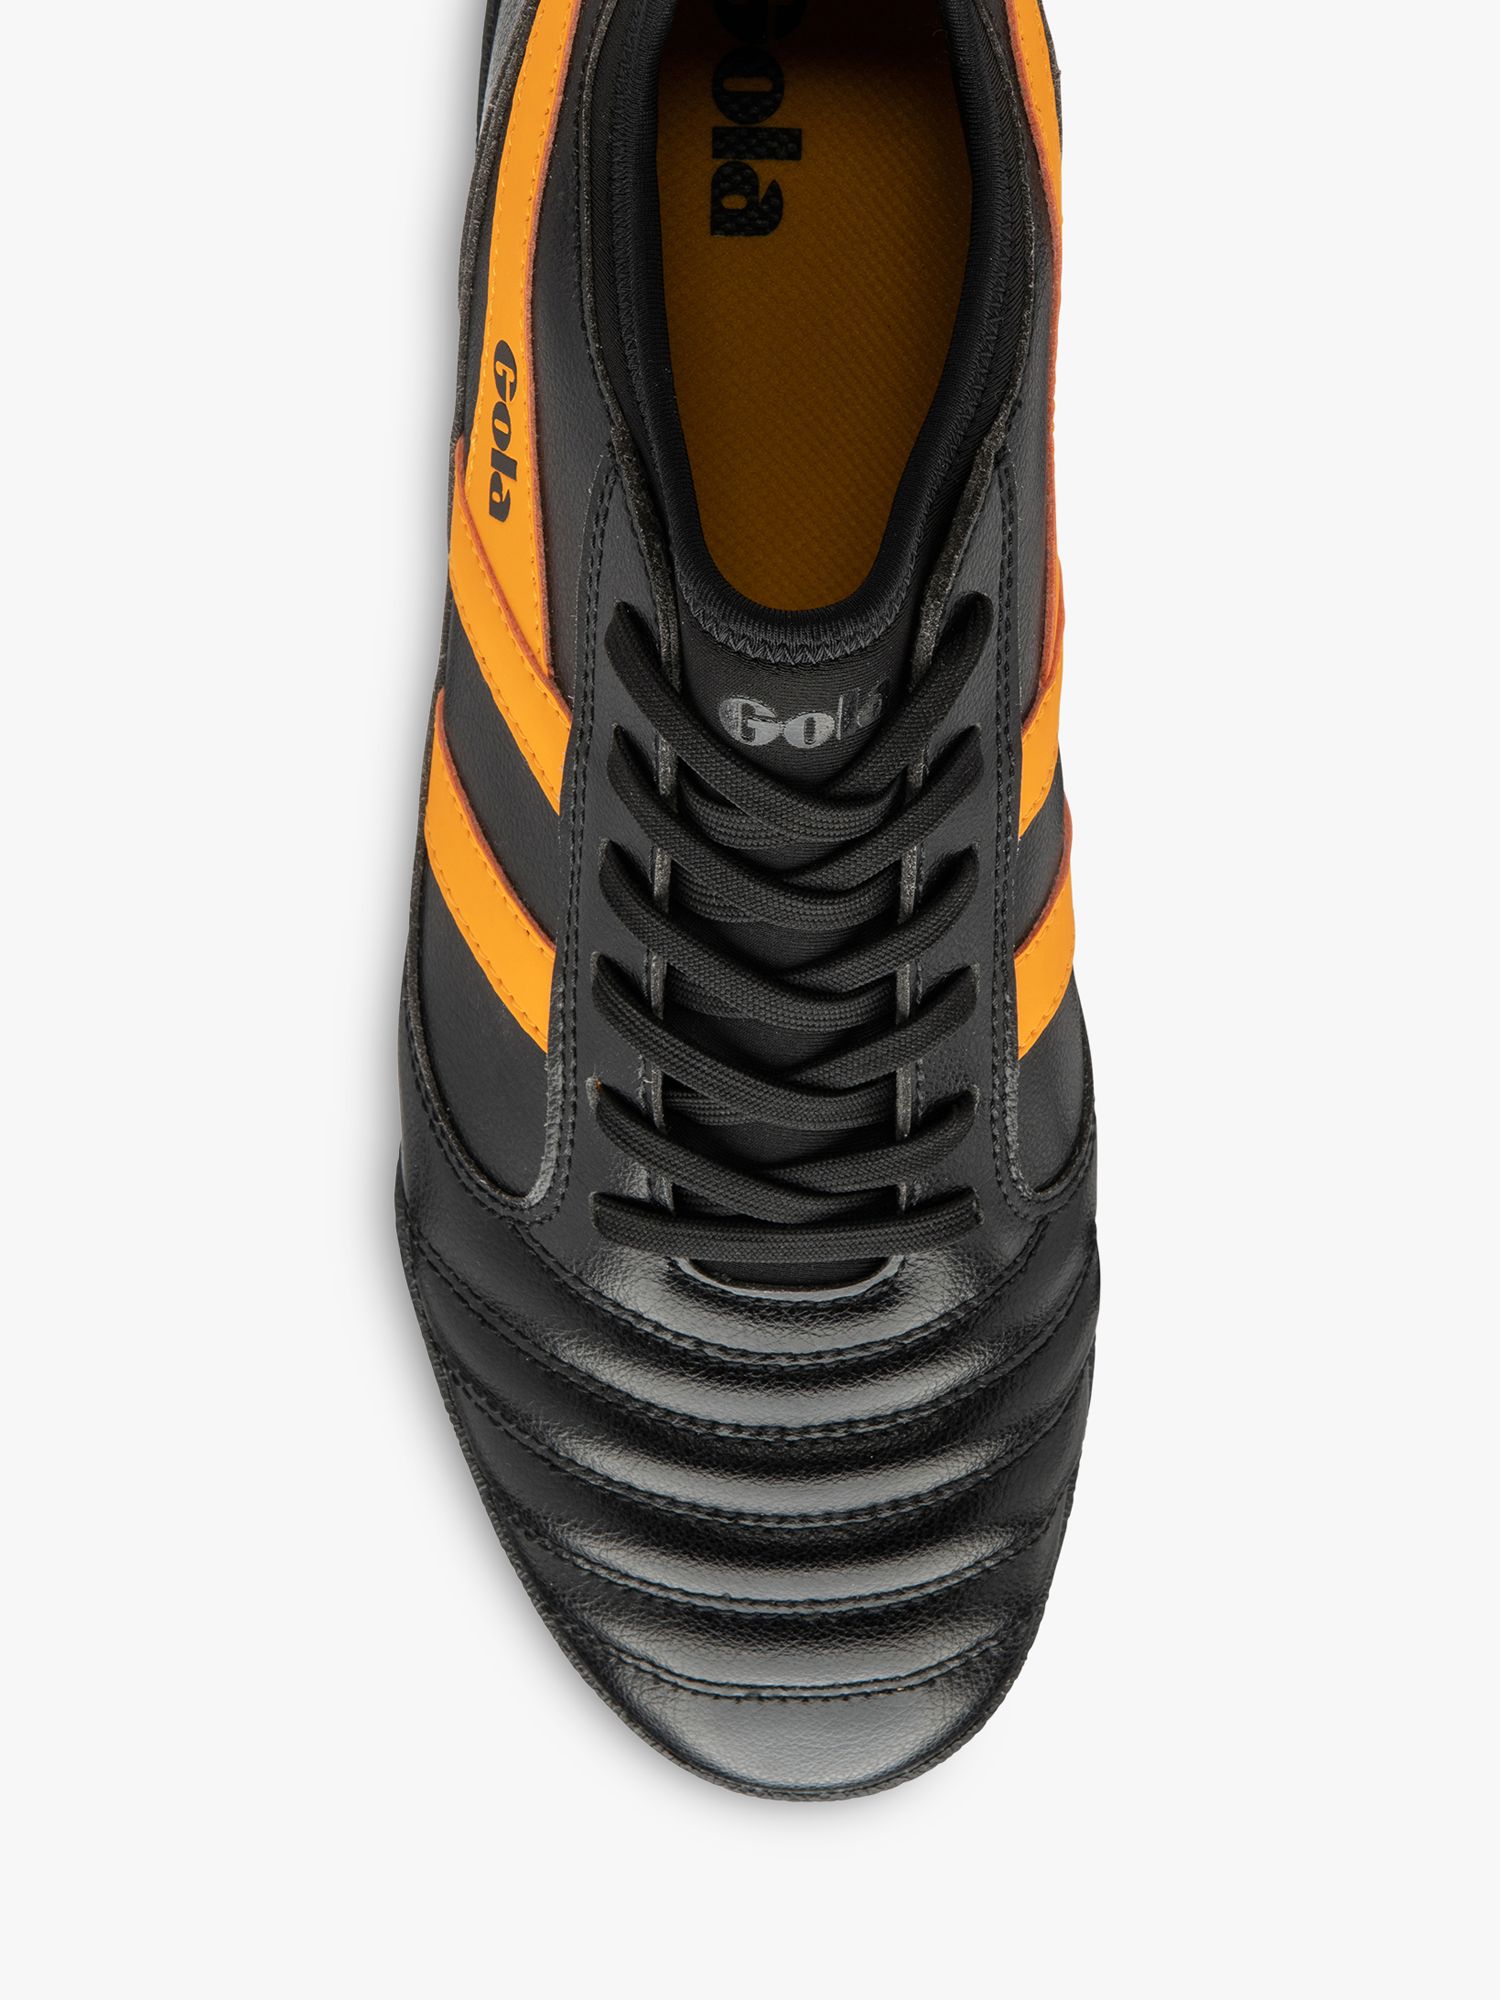 Gola Performance Ceptor MLD Pro Football Boots, Black/Sun, 10